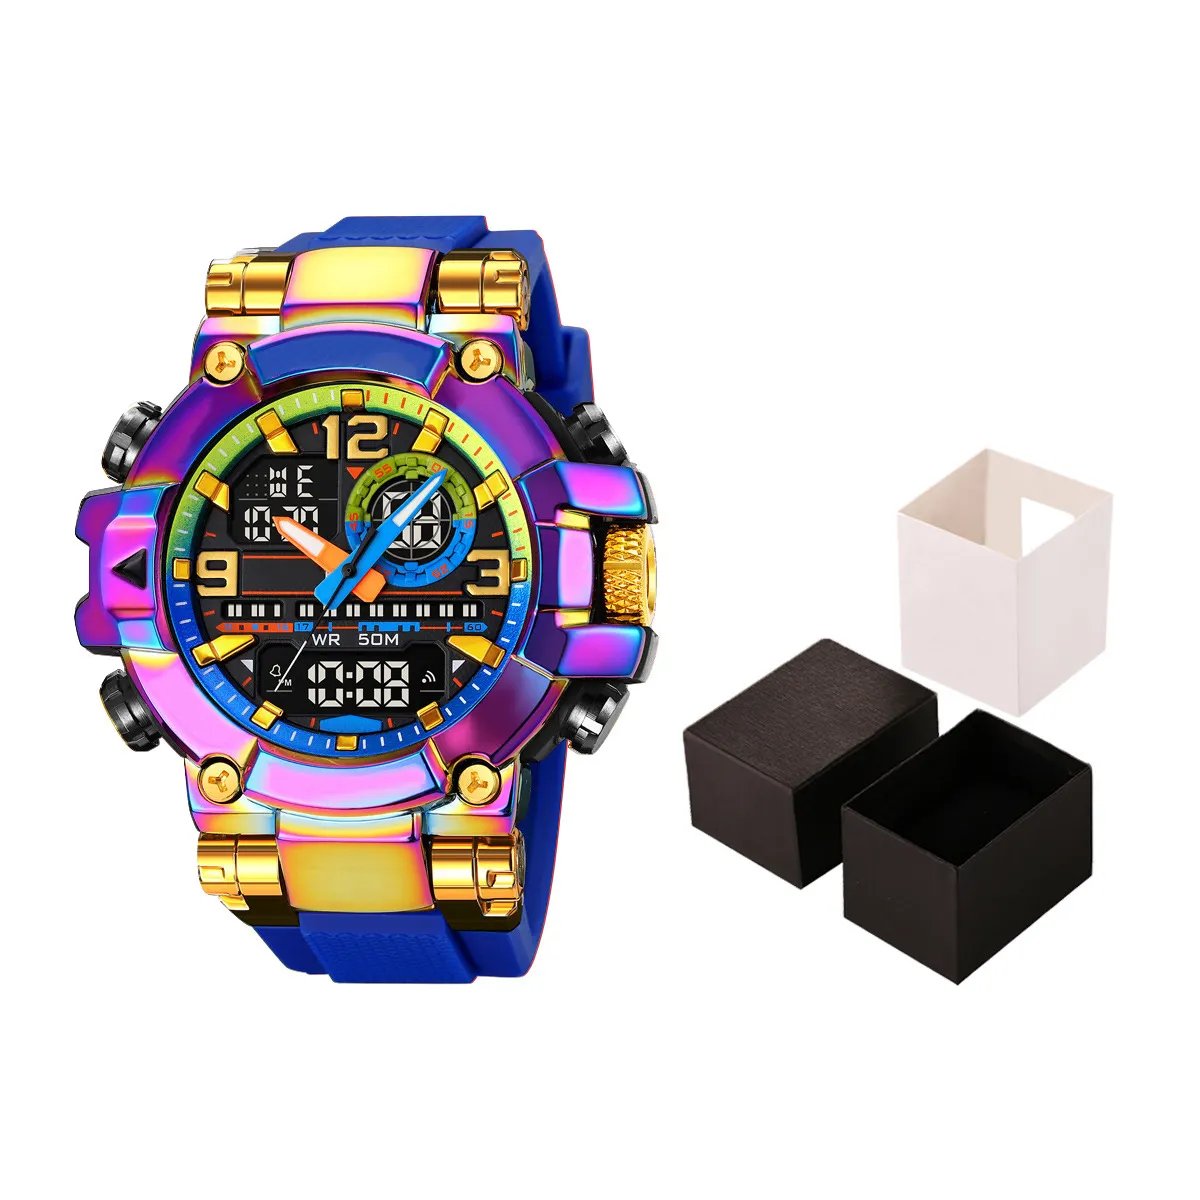 Watch for Men Digital Sport Watch Gold Waterproof Alarms Countdown Stopwatch Digital-Time Light Multifunctional Wrist Watch